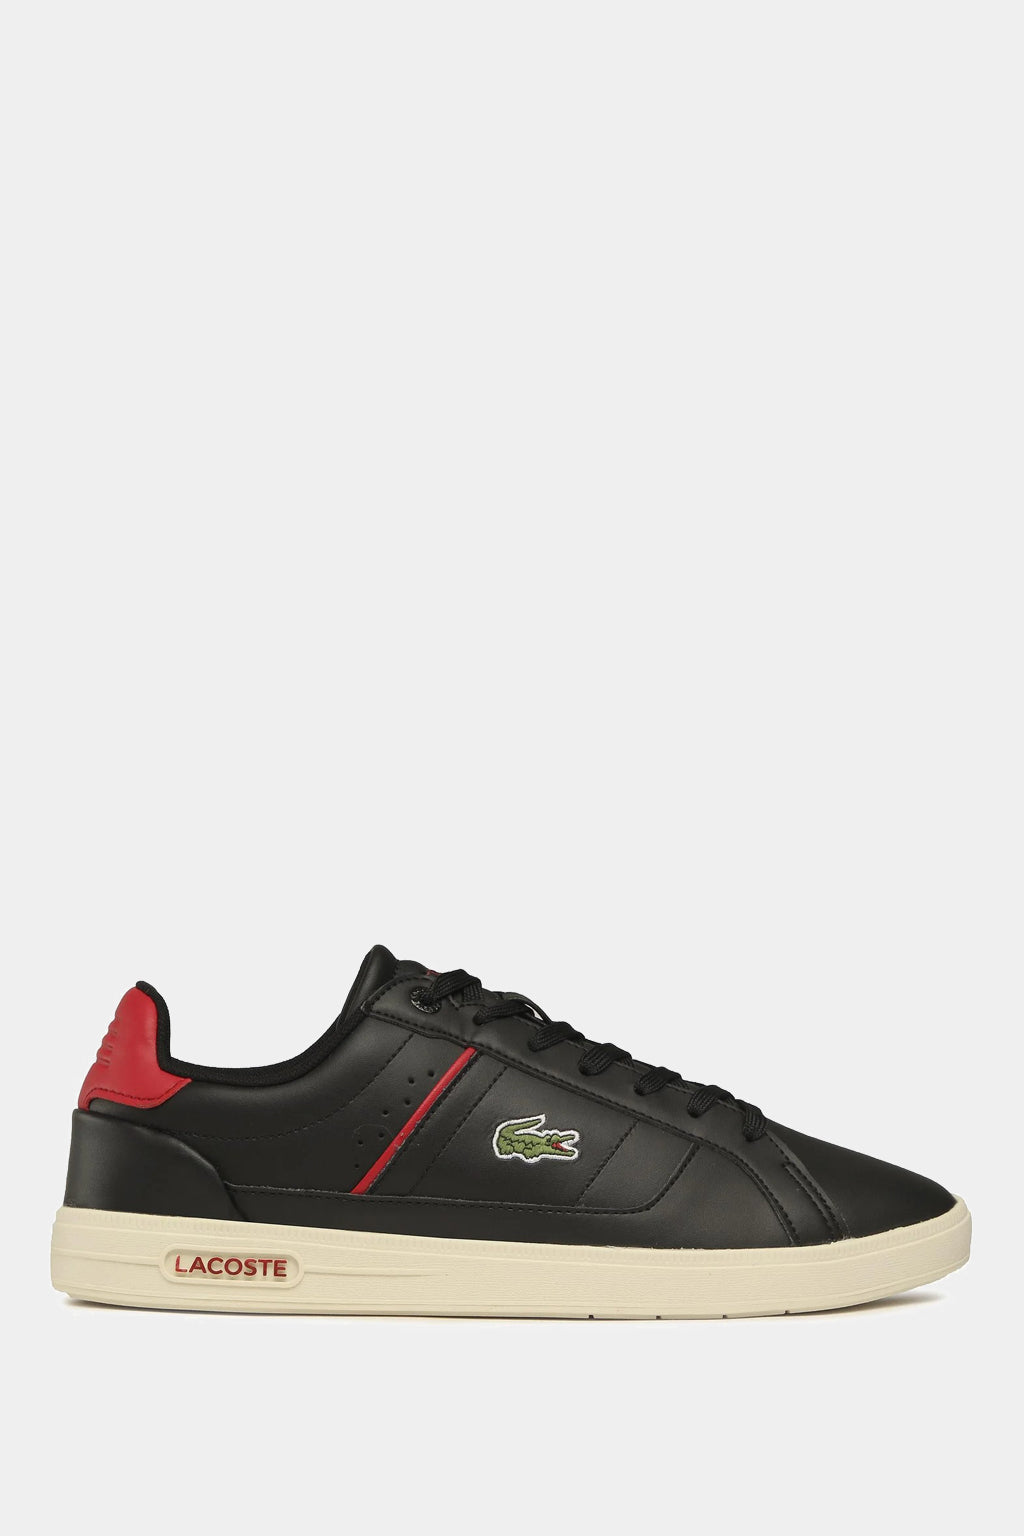 Lacoste - Sneakers Europa Pro 222 1 Sma